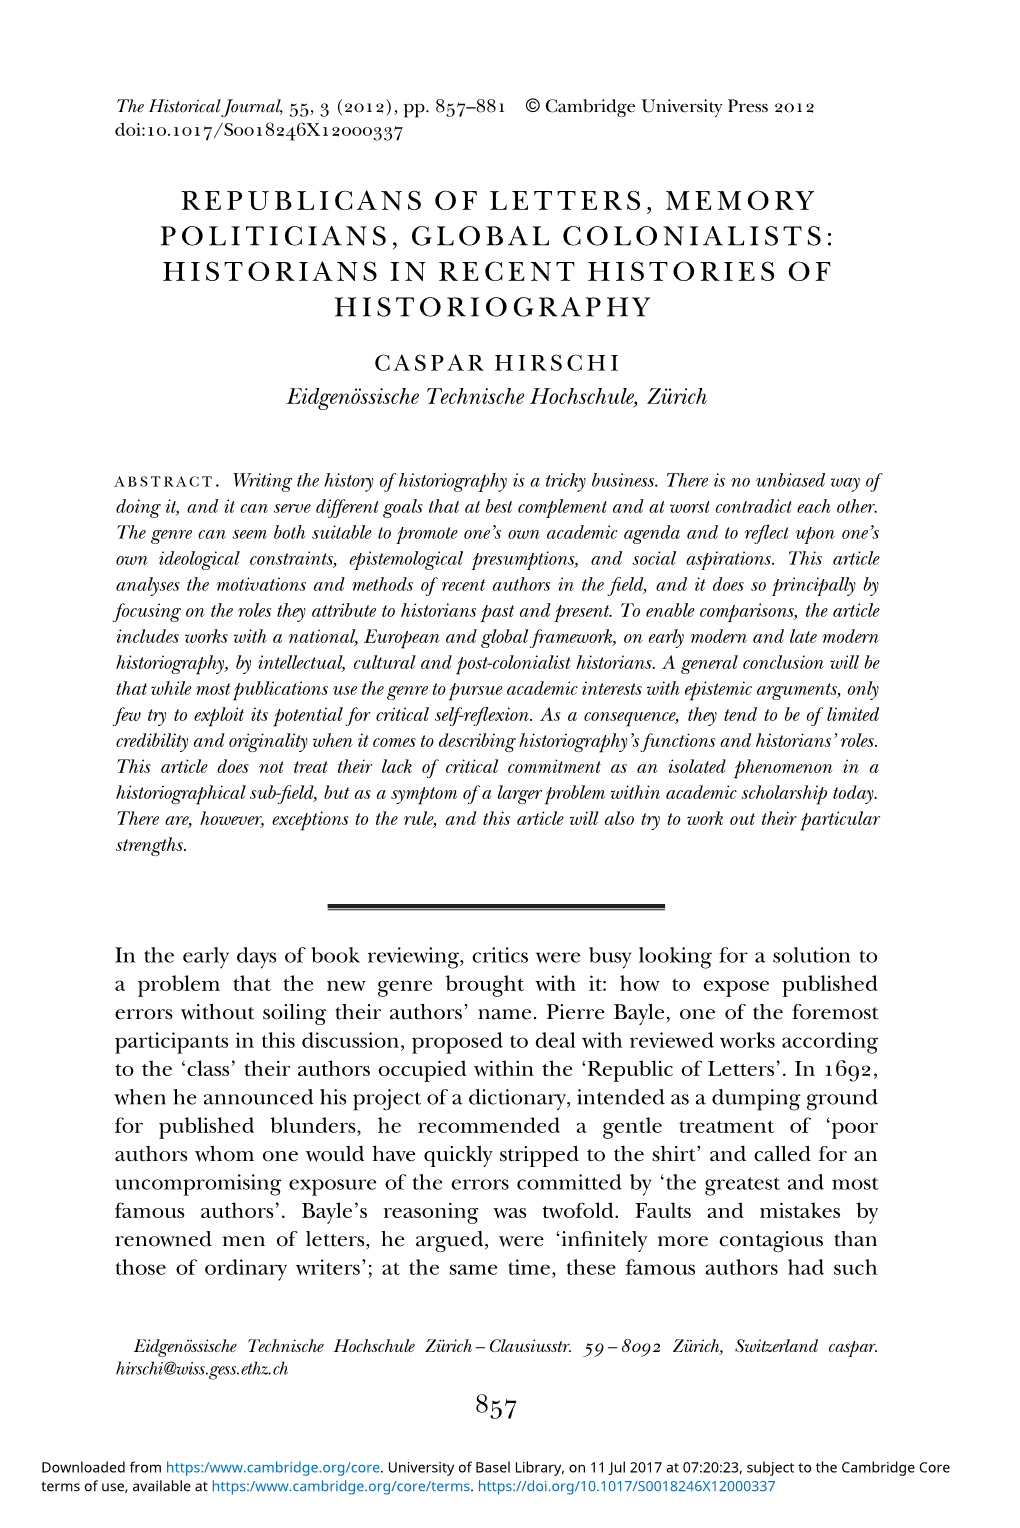 Historians in Recent Histories of Historiography